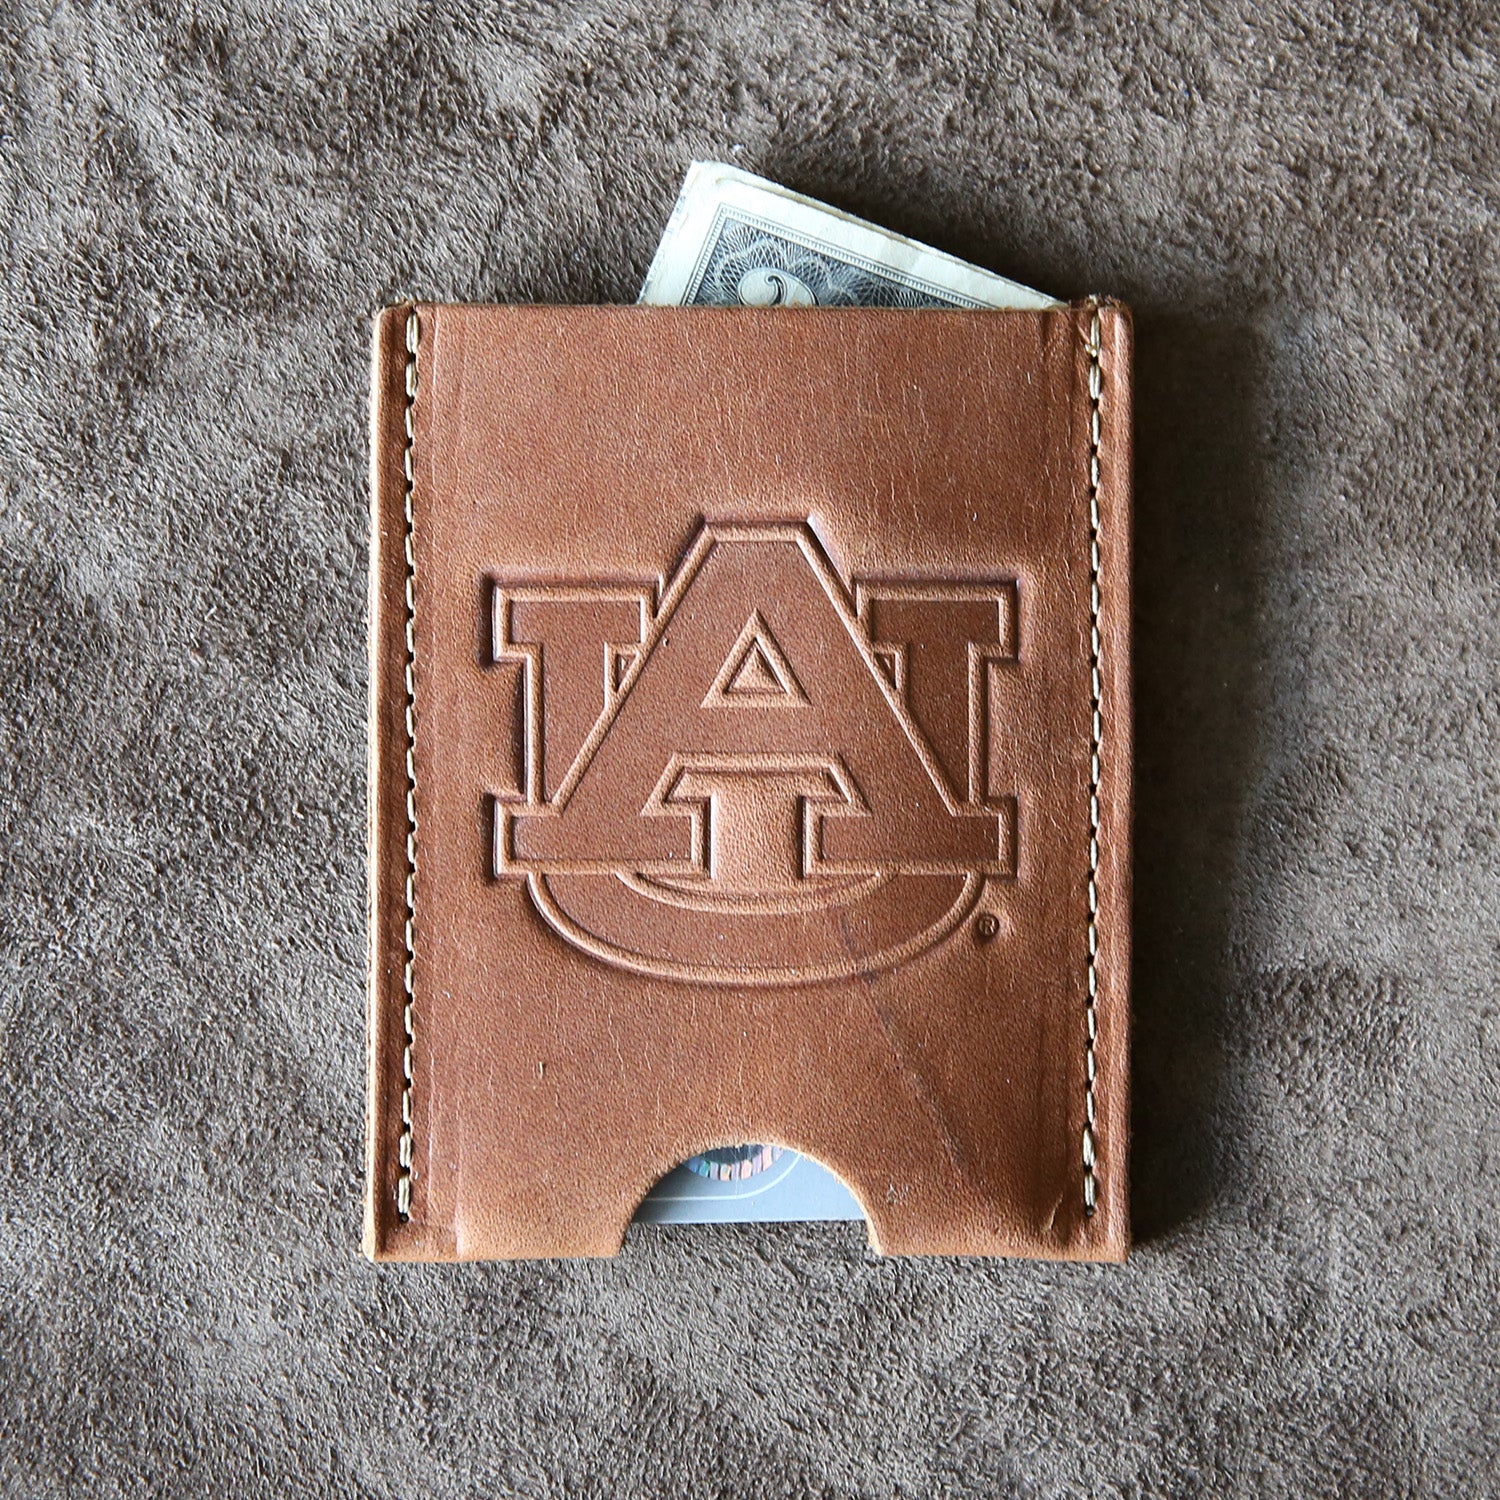 Fine leather card holder wallet with Auburn University logo